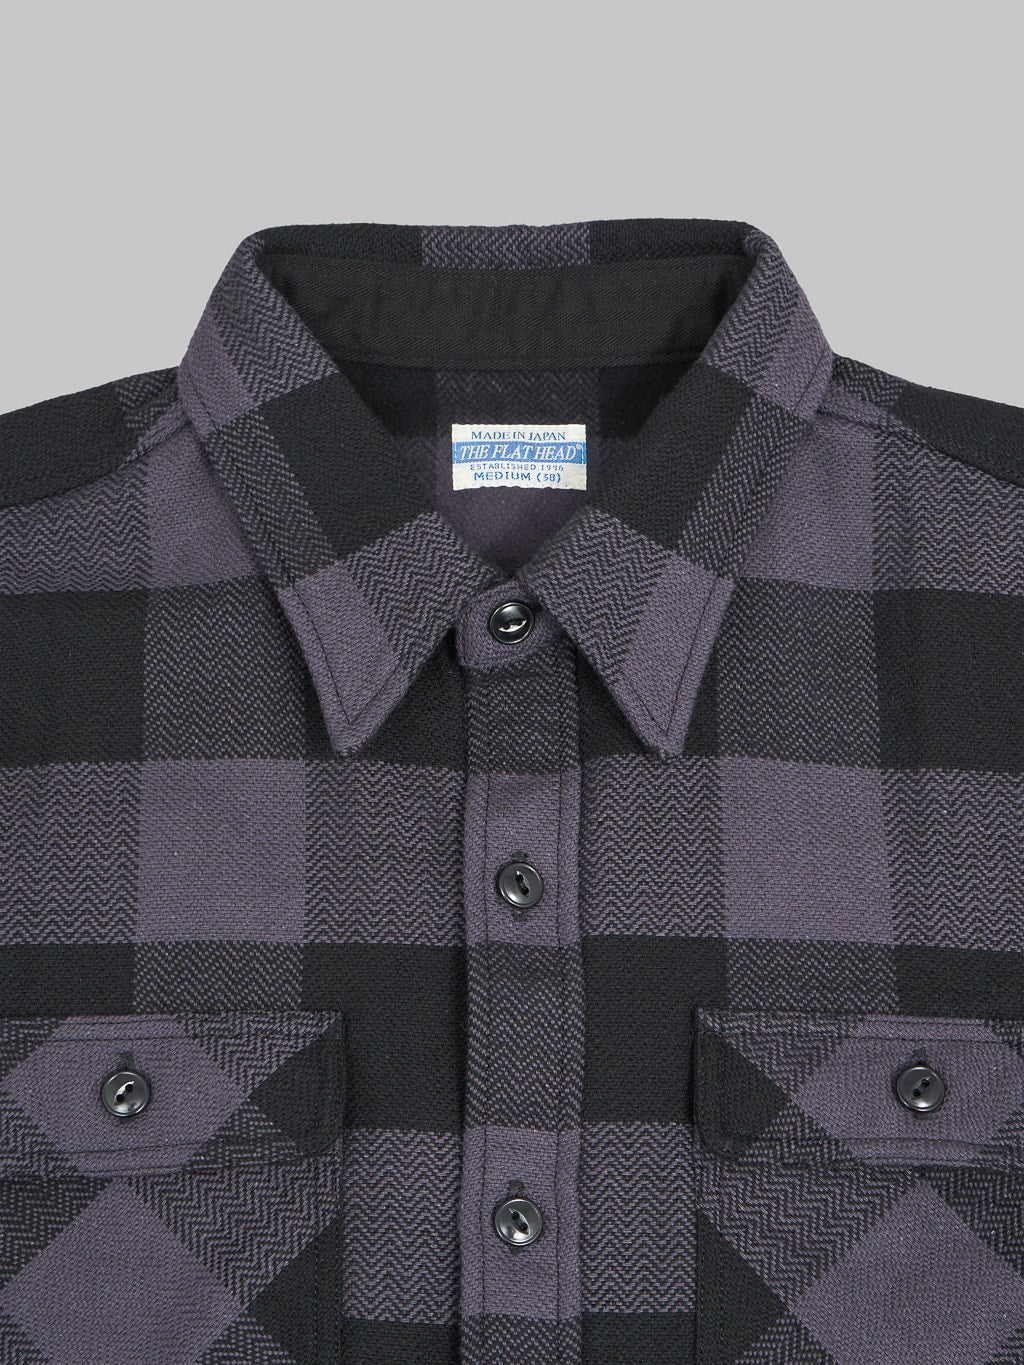 The Flat Head Block Check Flannel Shirt Grey collar detail